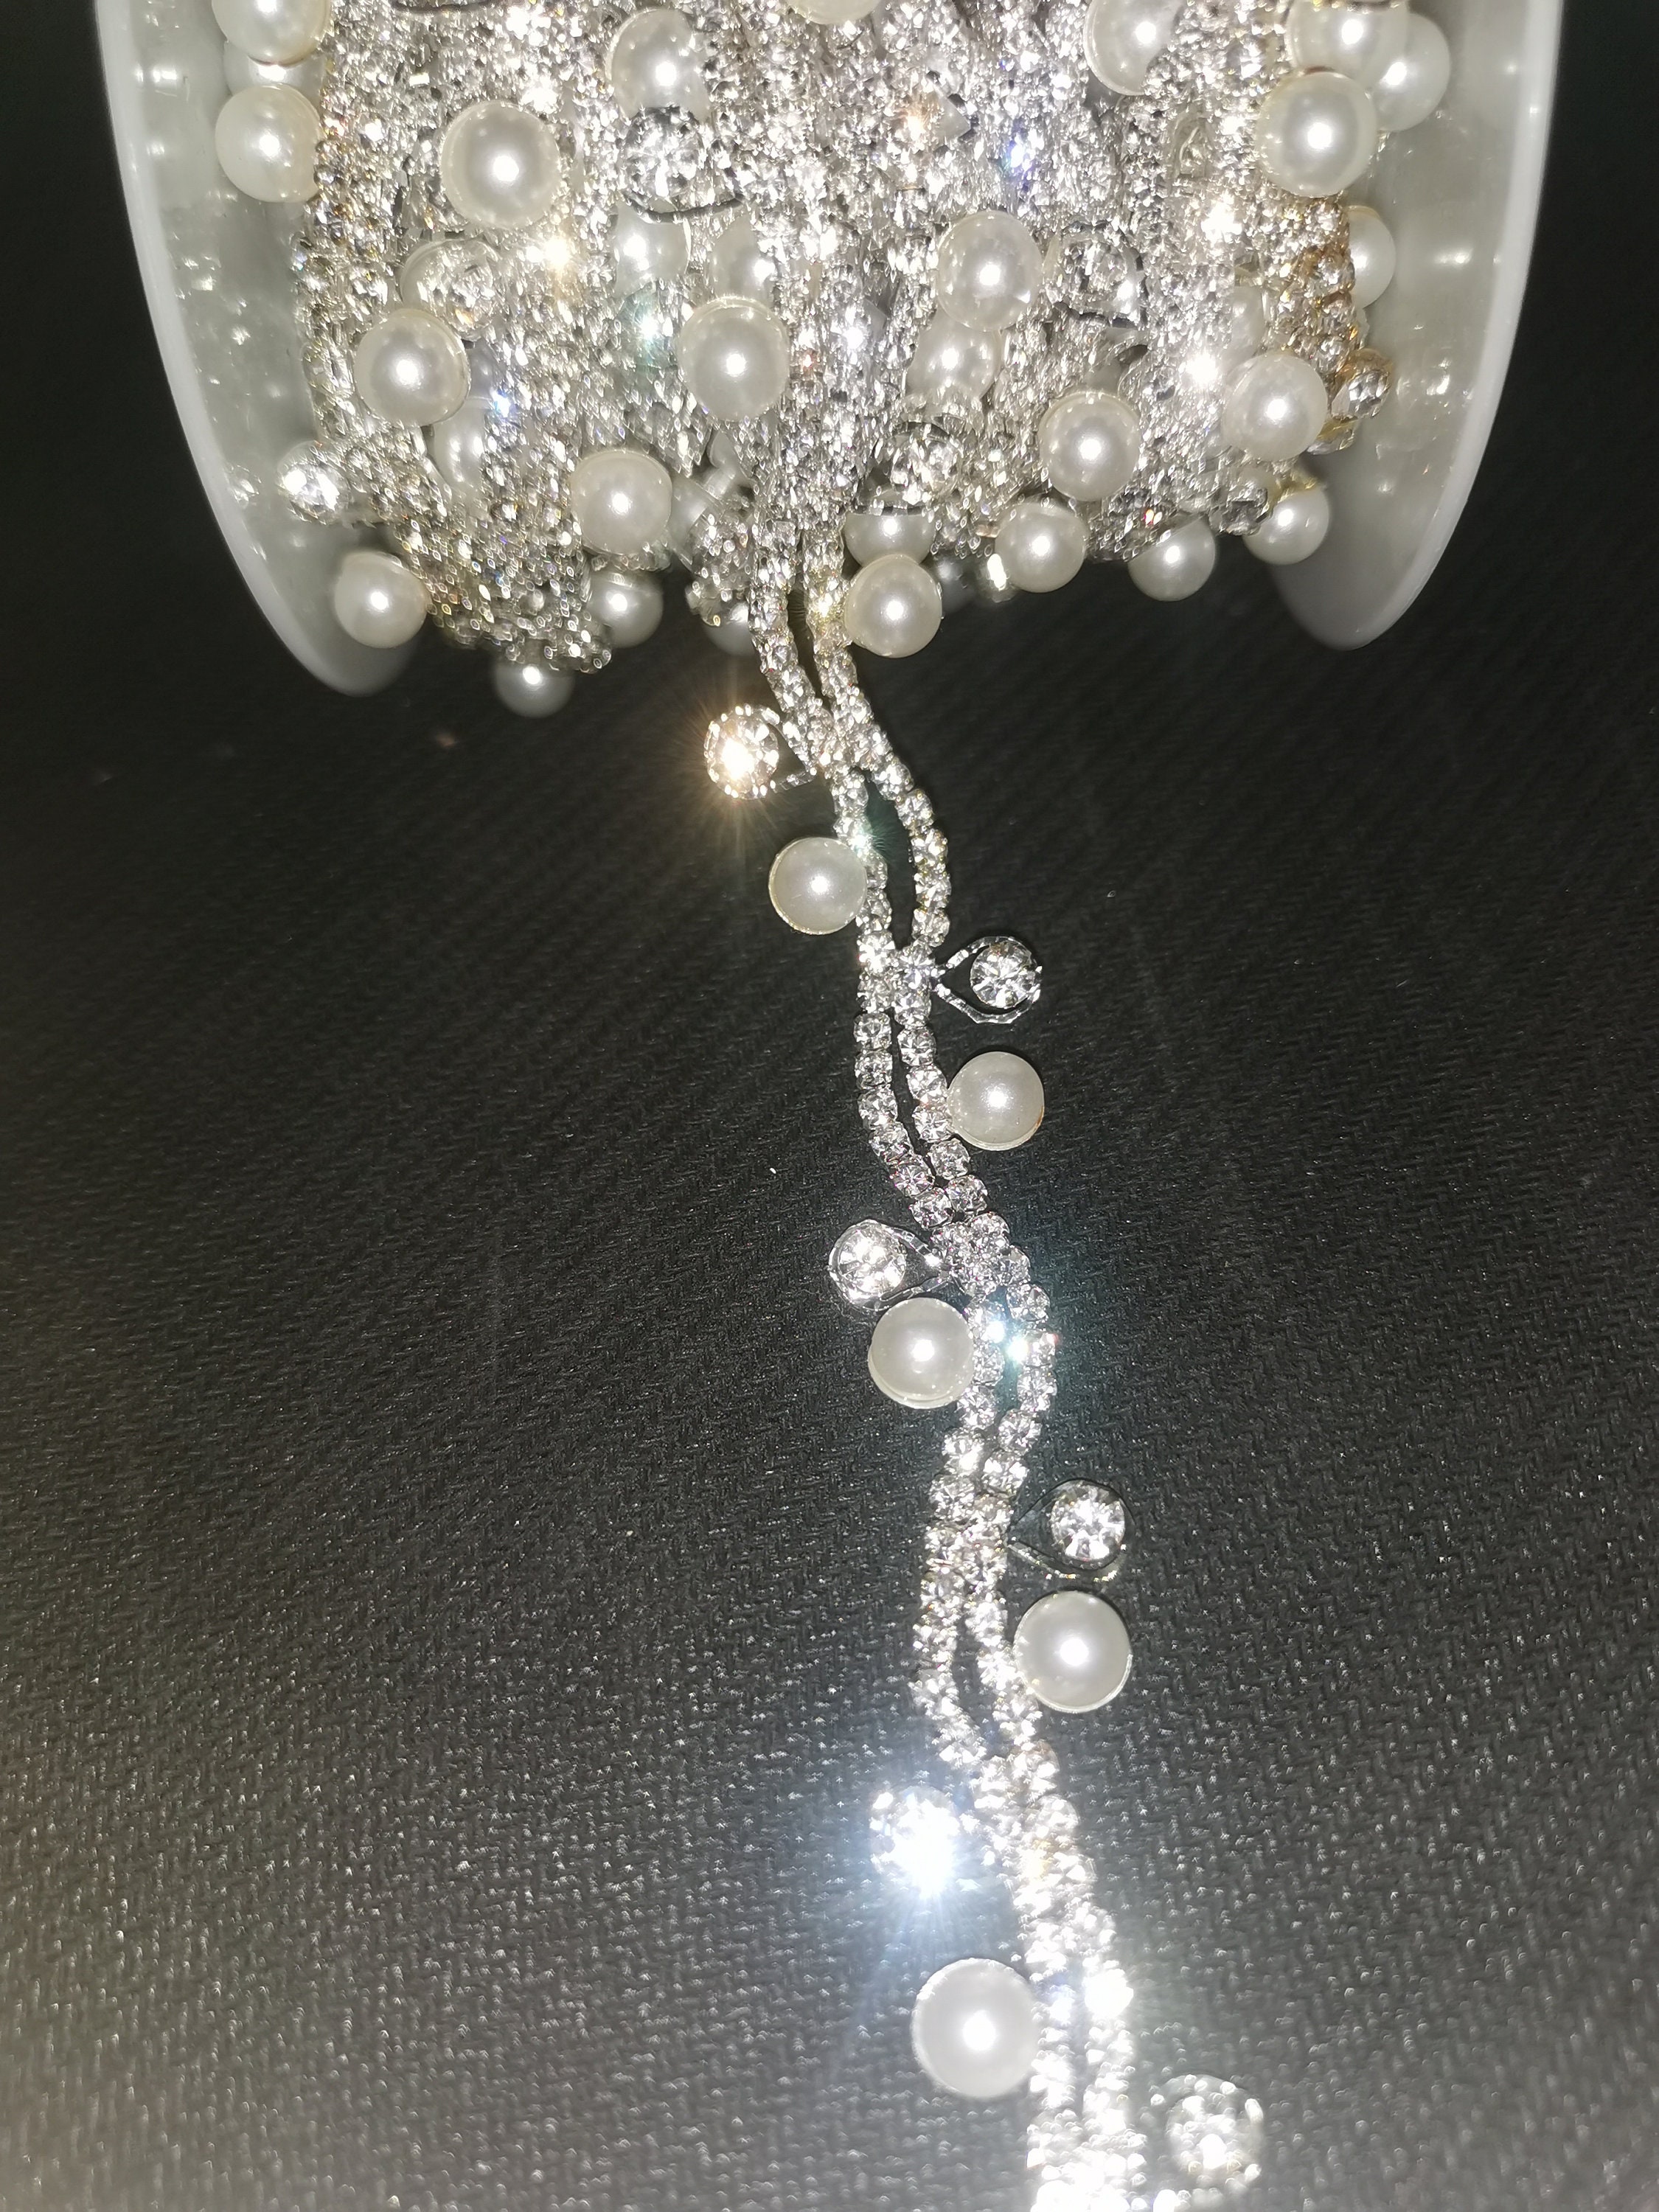 Rytenz Rhinestone Trim Applique 1 Yard Crystal Chain Banding Diamond Inlaid  White Pearl Beaded Rhinestones for Crafts Clothing and Bridal